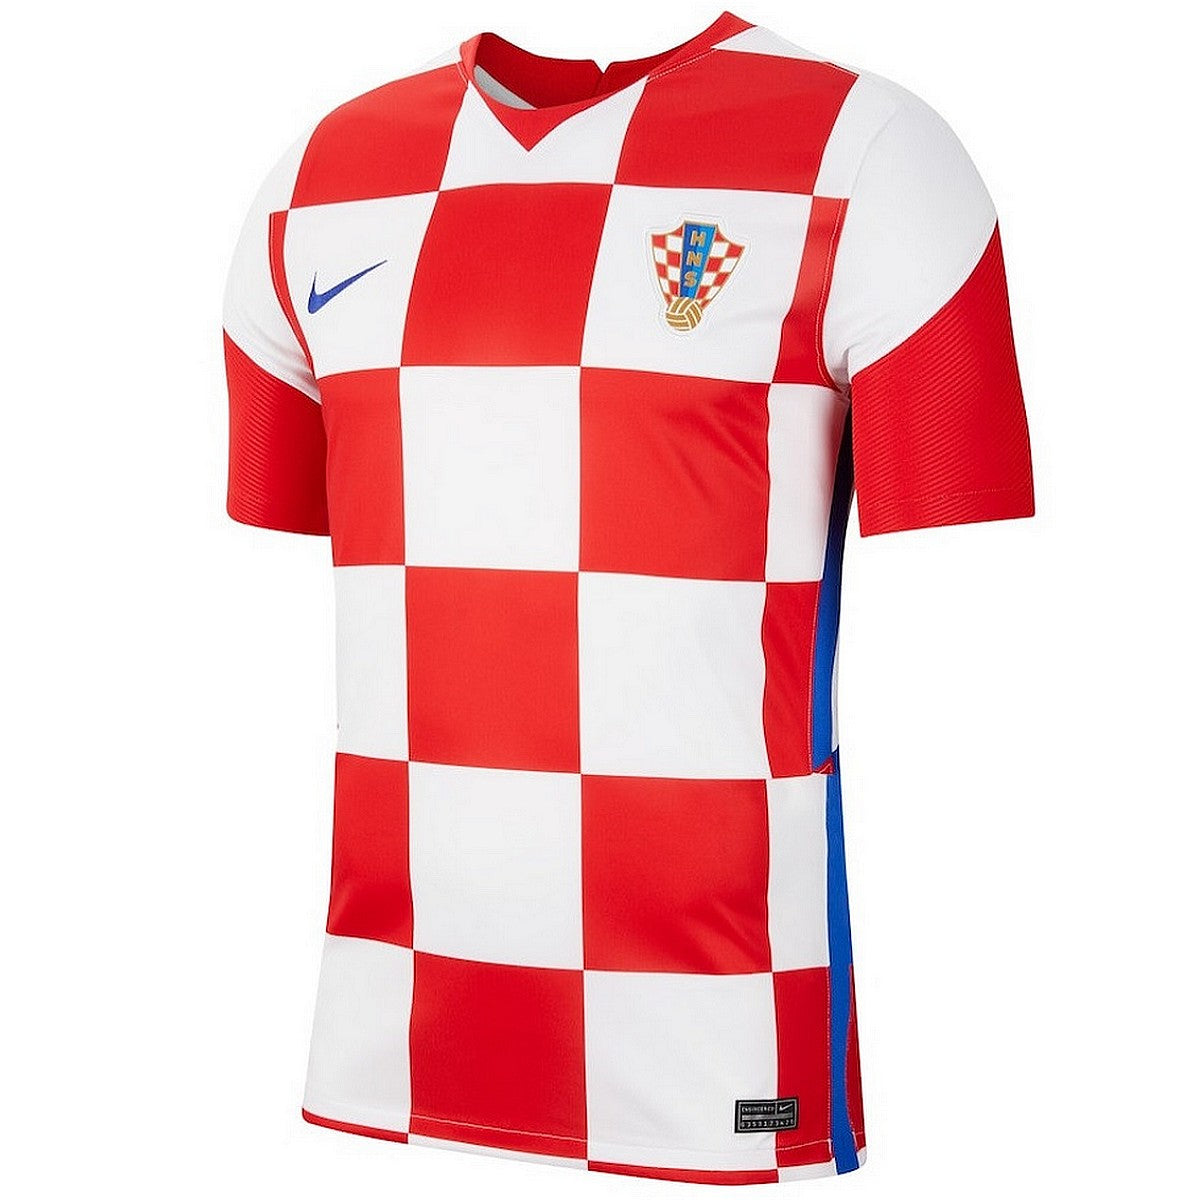 Croatia national team Home soccer jersey 2020/21 - Nike ...